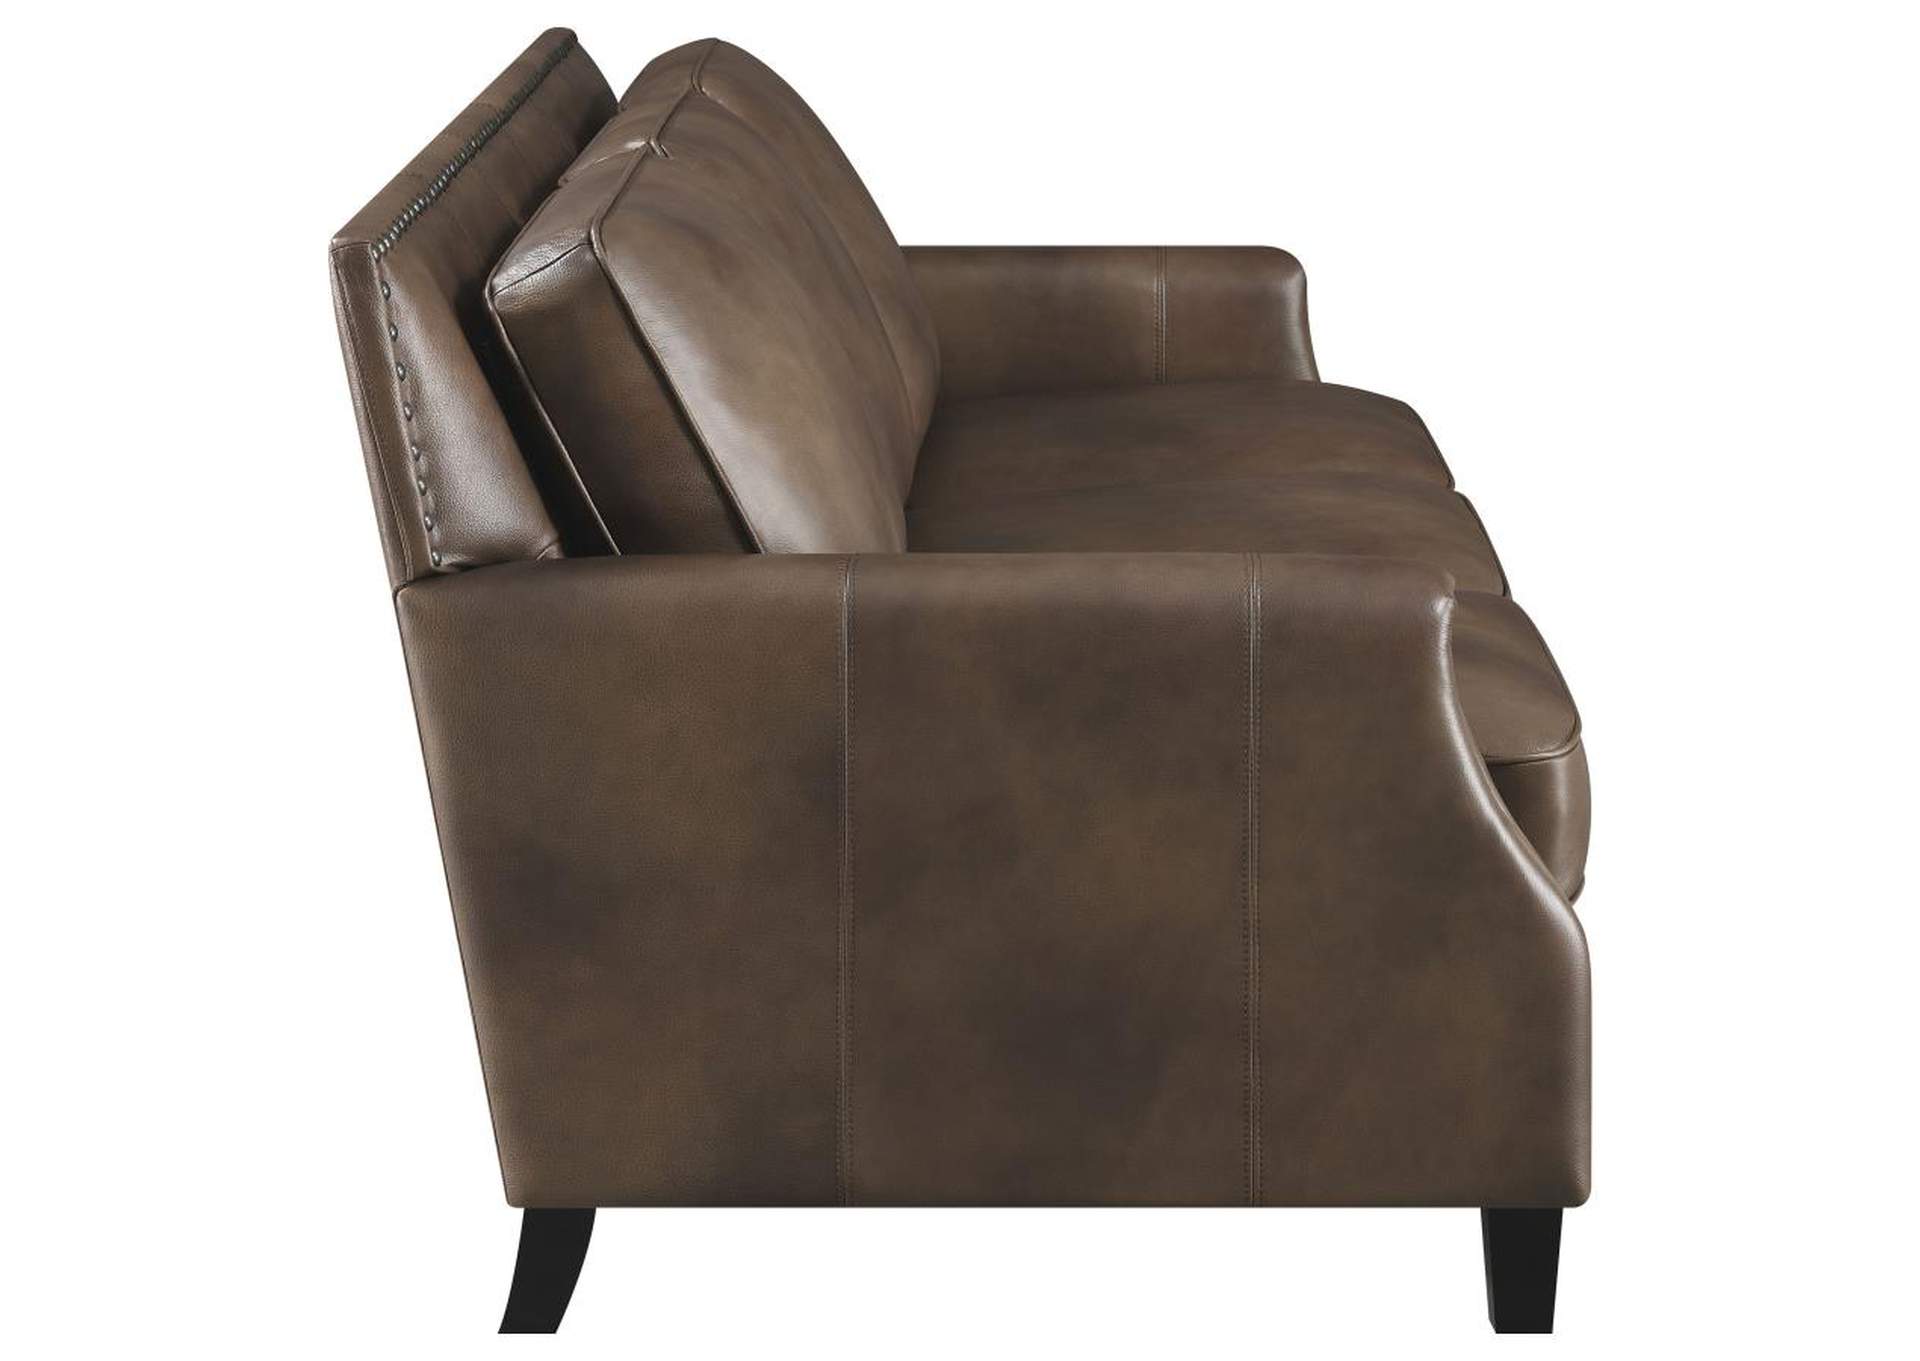 Leaton Upholstered Recessed Arms Sofa Brown Sugar,Coaster Furniture